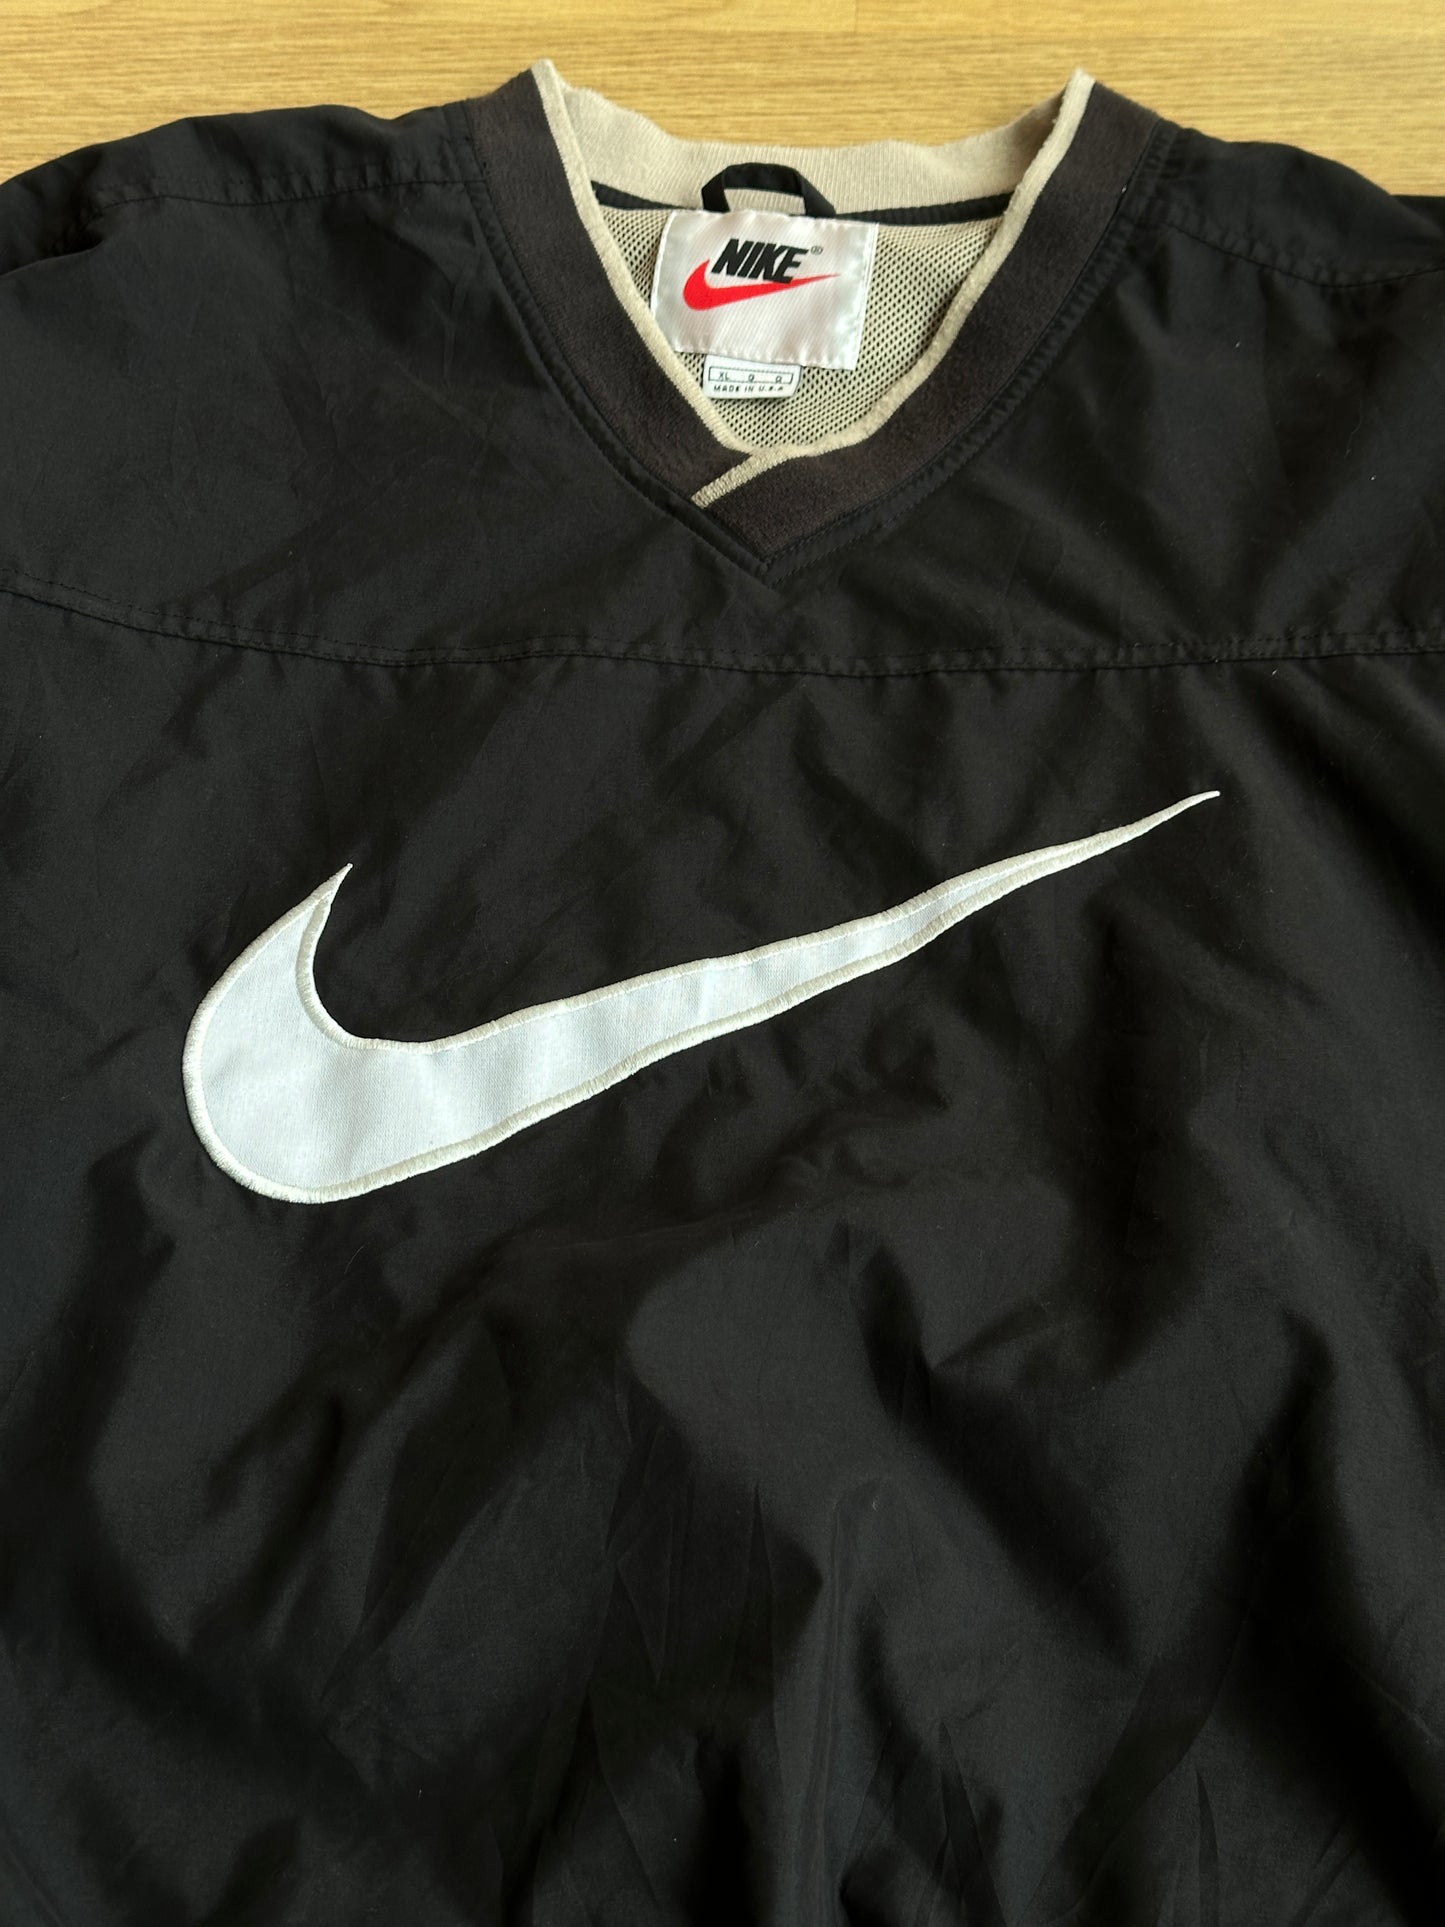 Vintage Nike Pullover